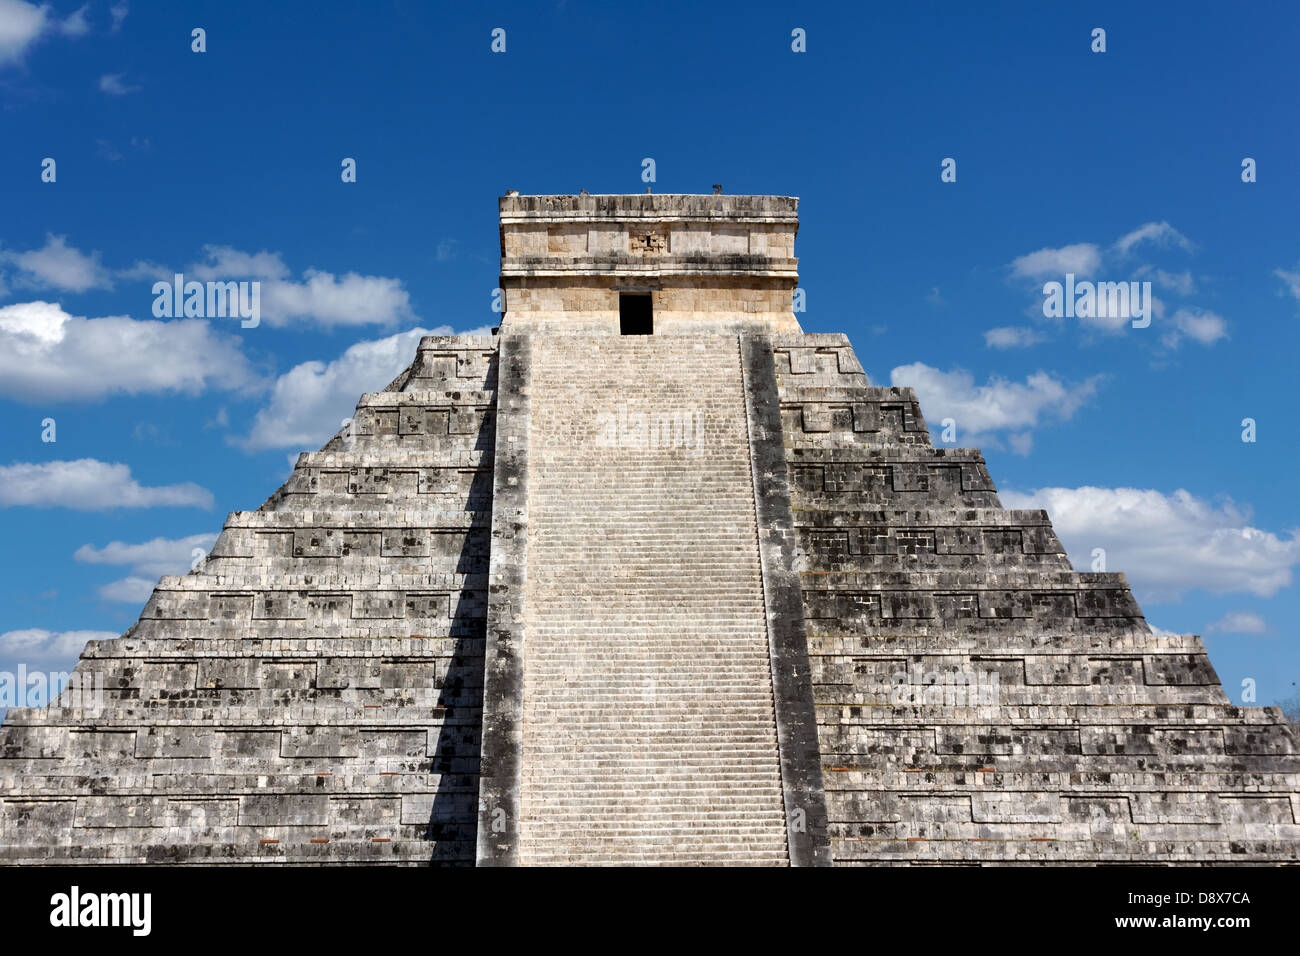 Mayan temple Pyramid called El Castillo at Chichen Itza, Yucatan, Mexico. Stock Photo